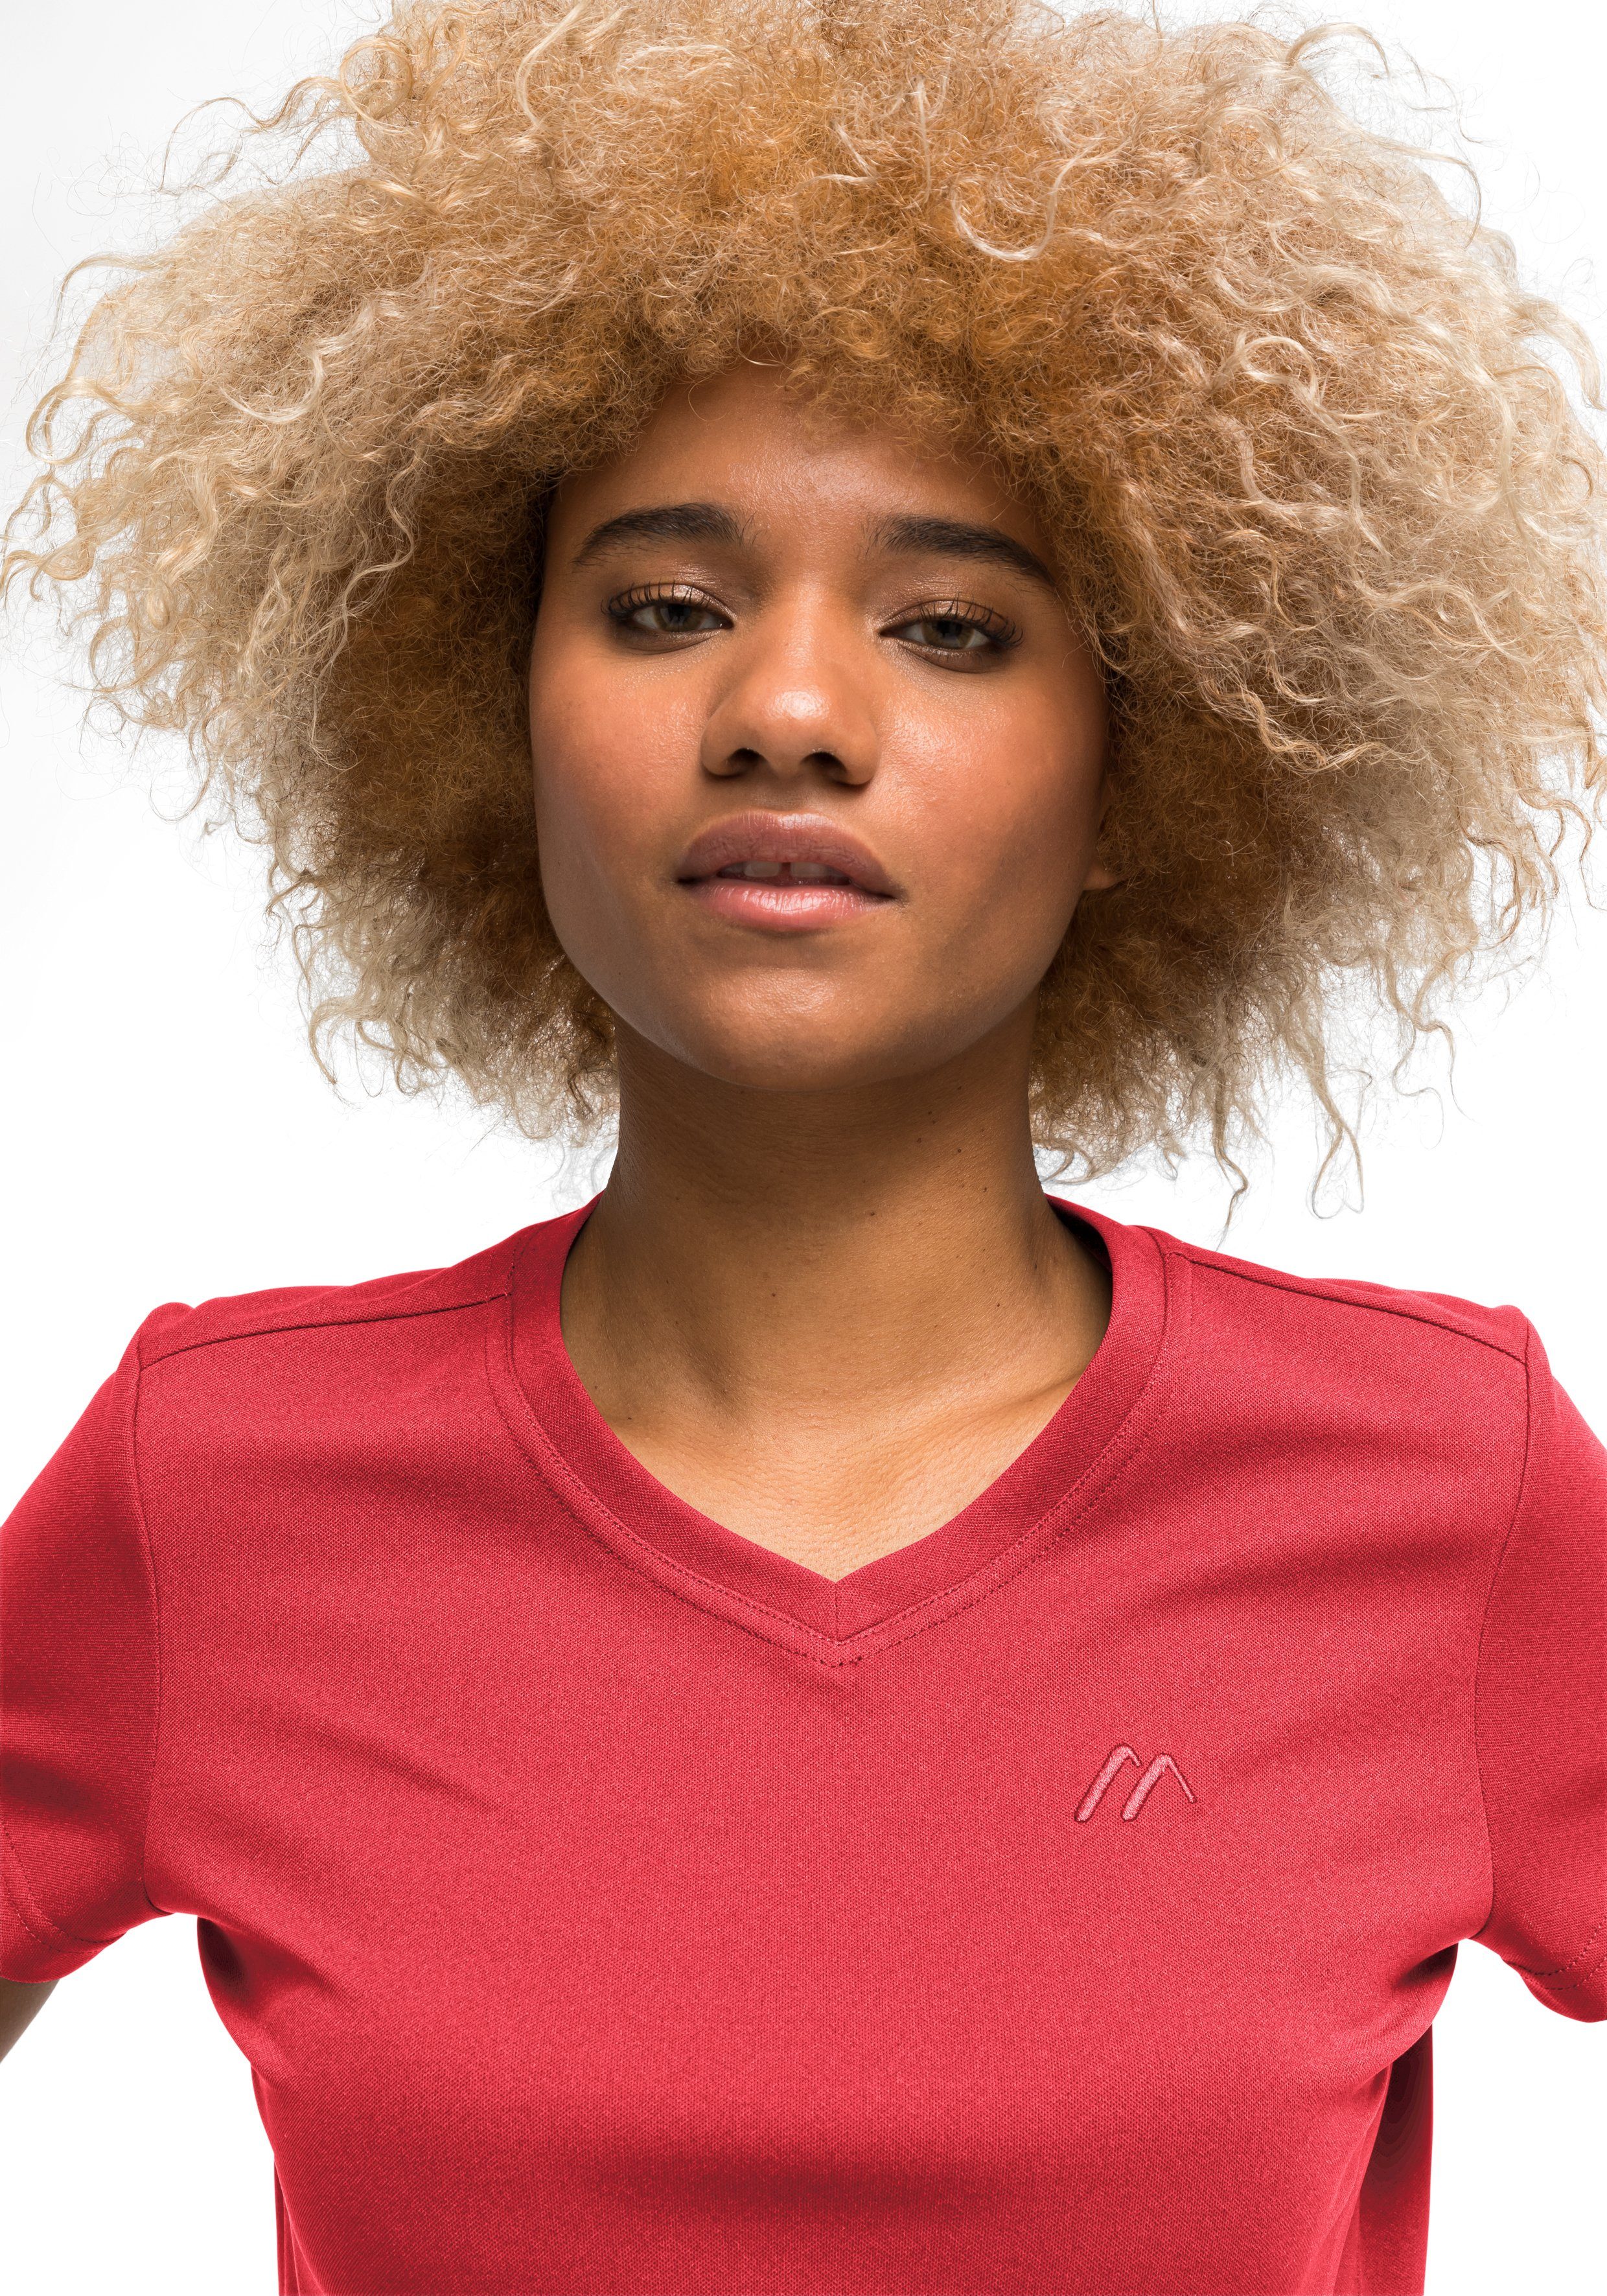 Sports Maier Wandern T-Shirt, Funktionsshirt Freizeit für Trudy Damen Kurzarmshirt und hellrot